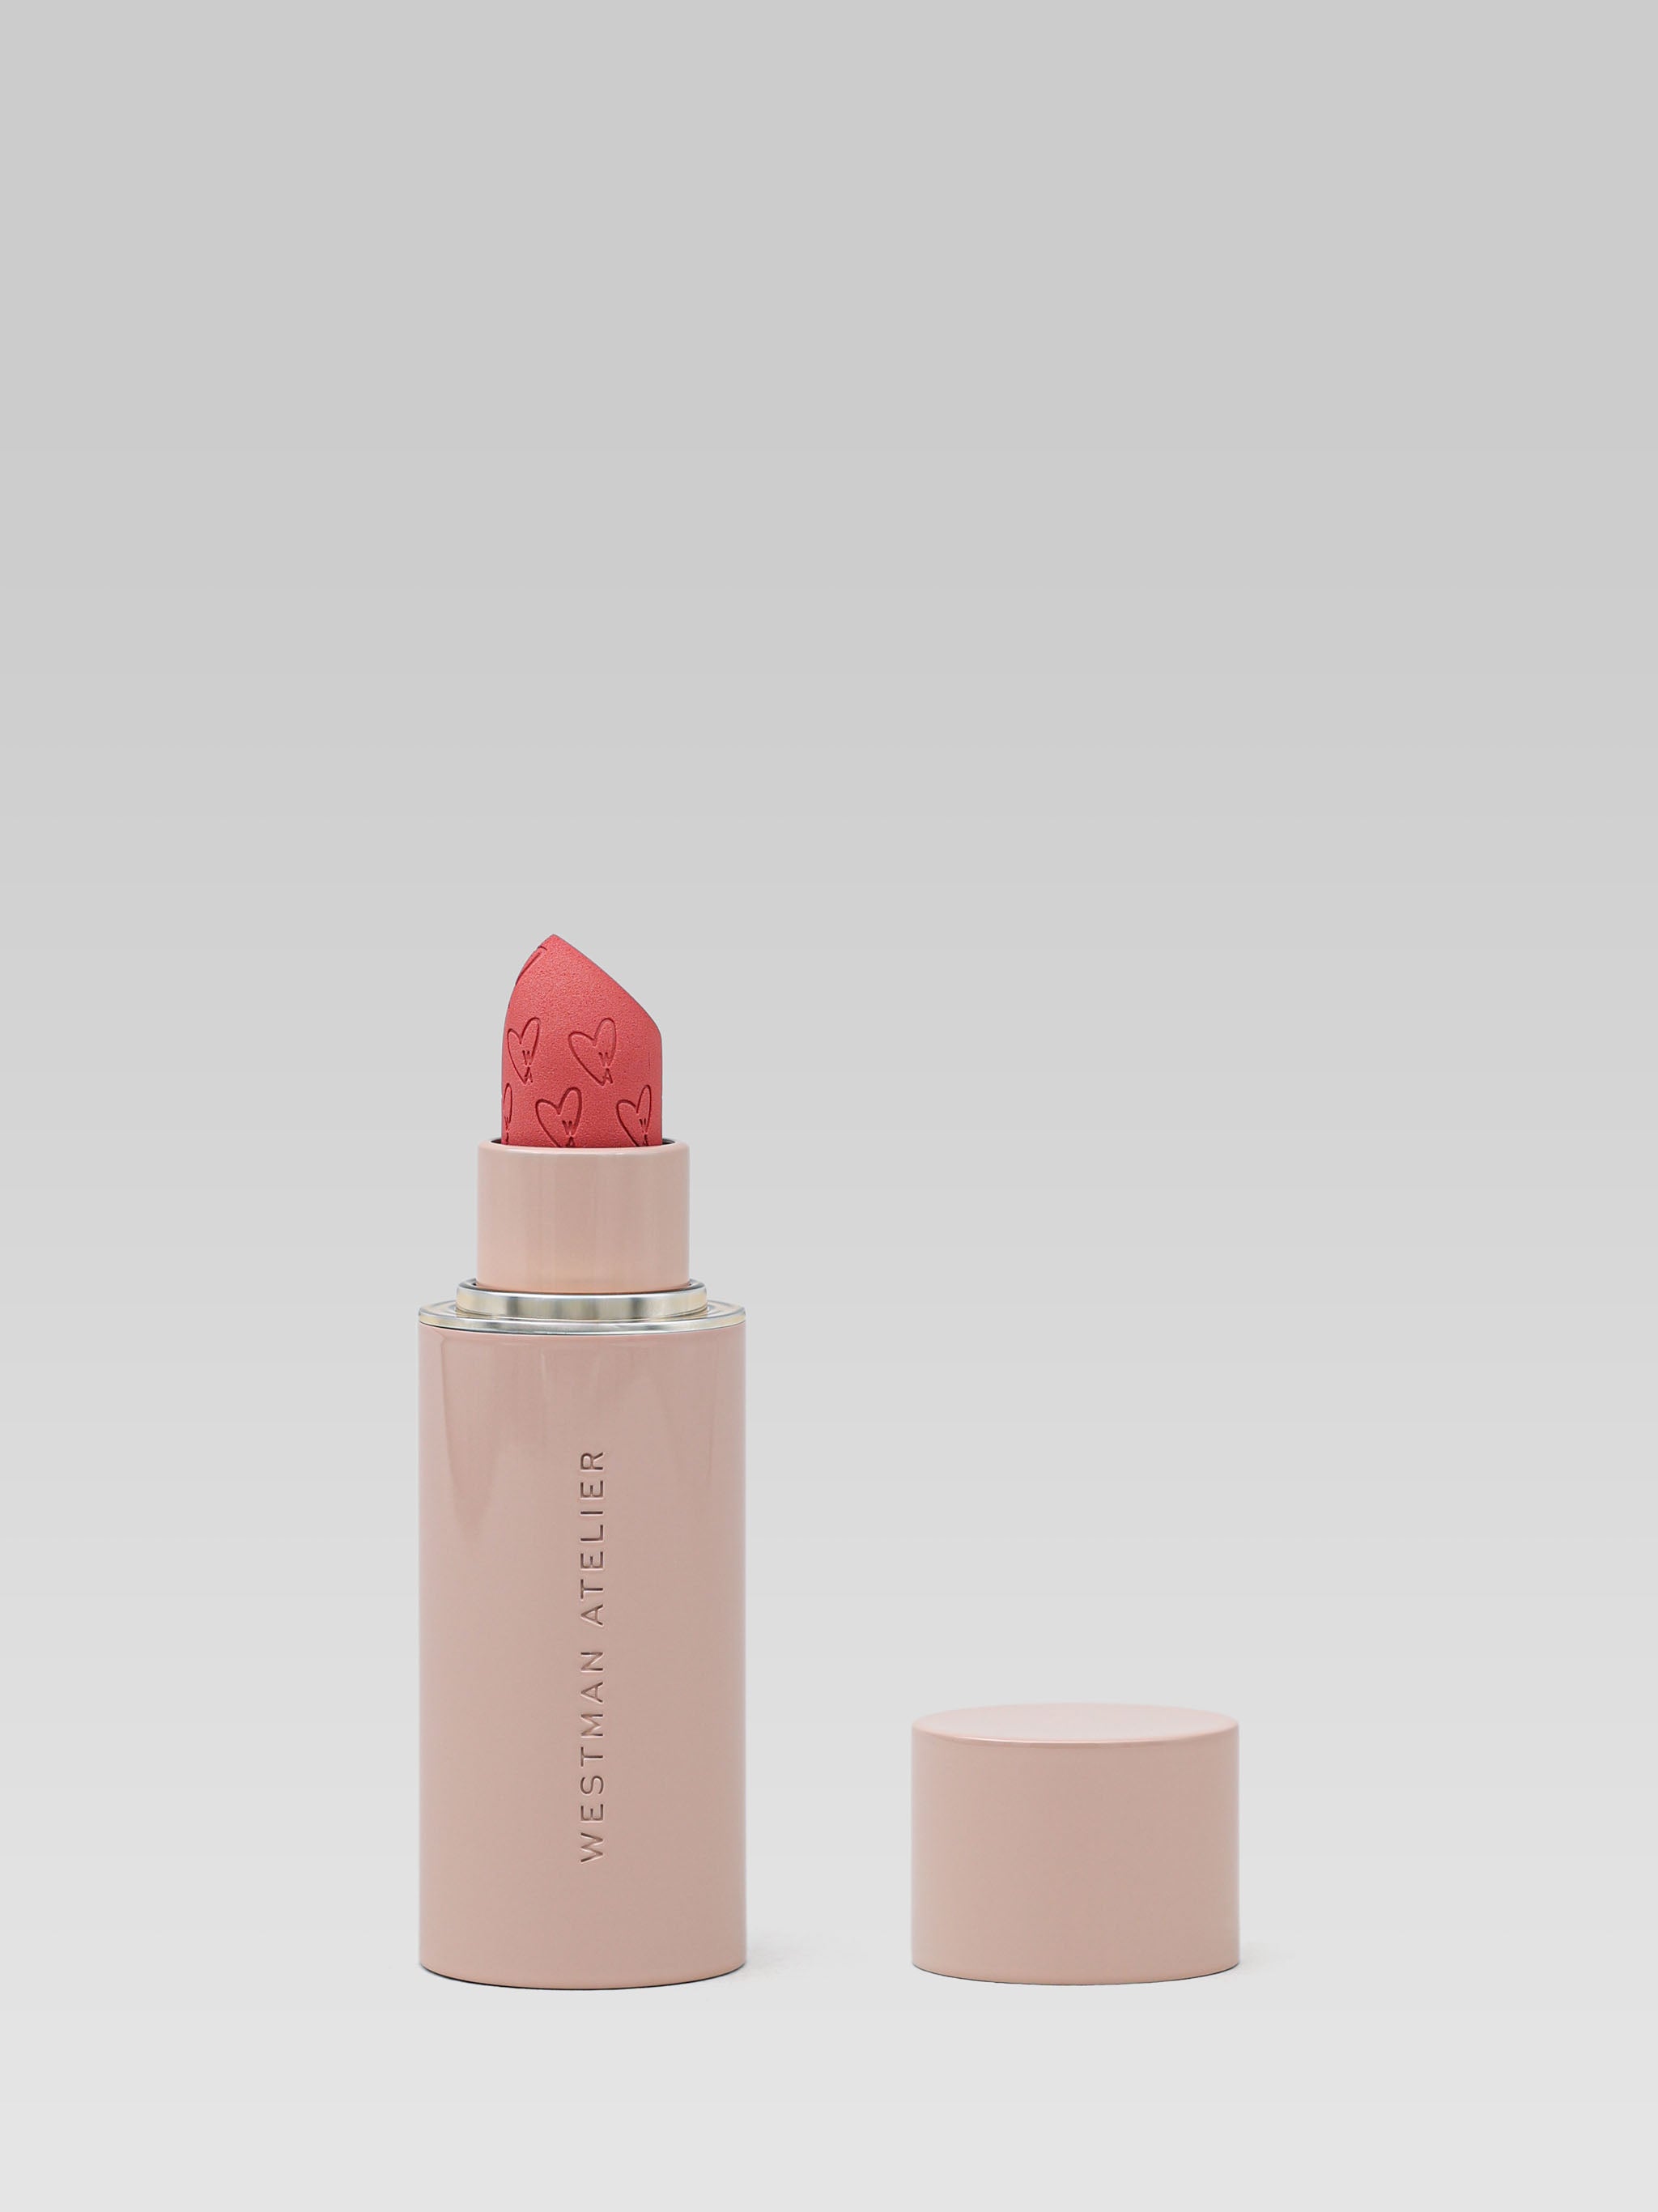 Westman Atelier Lip Suede Matte Lipstick in Minx product shot